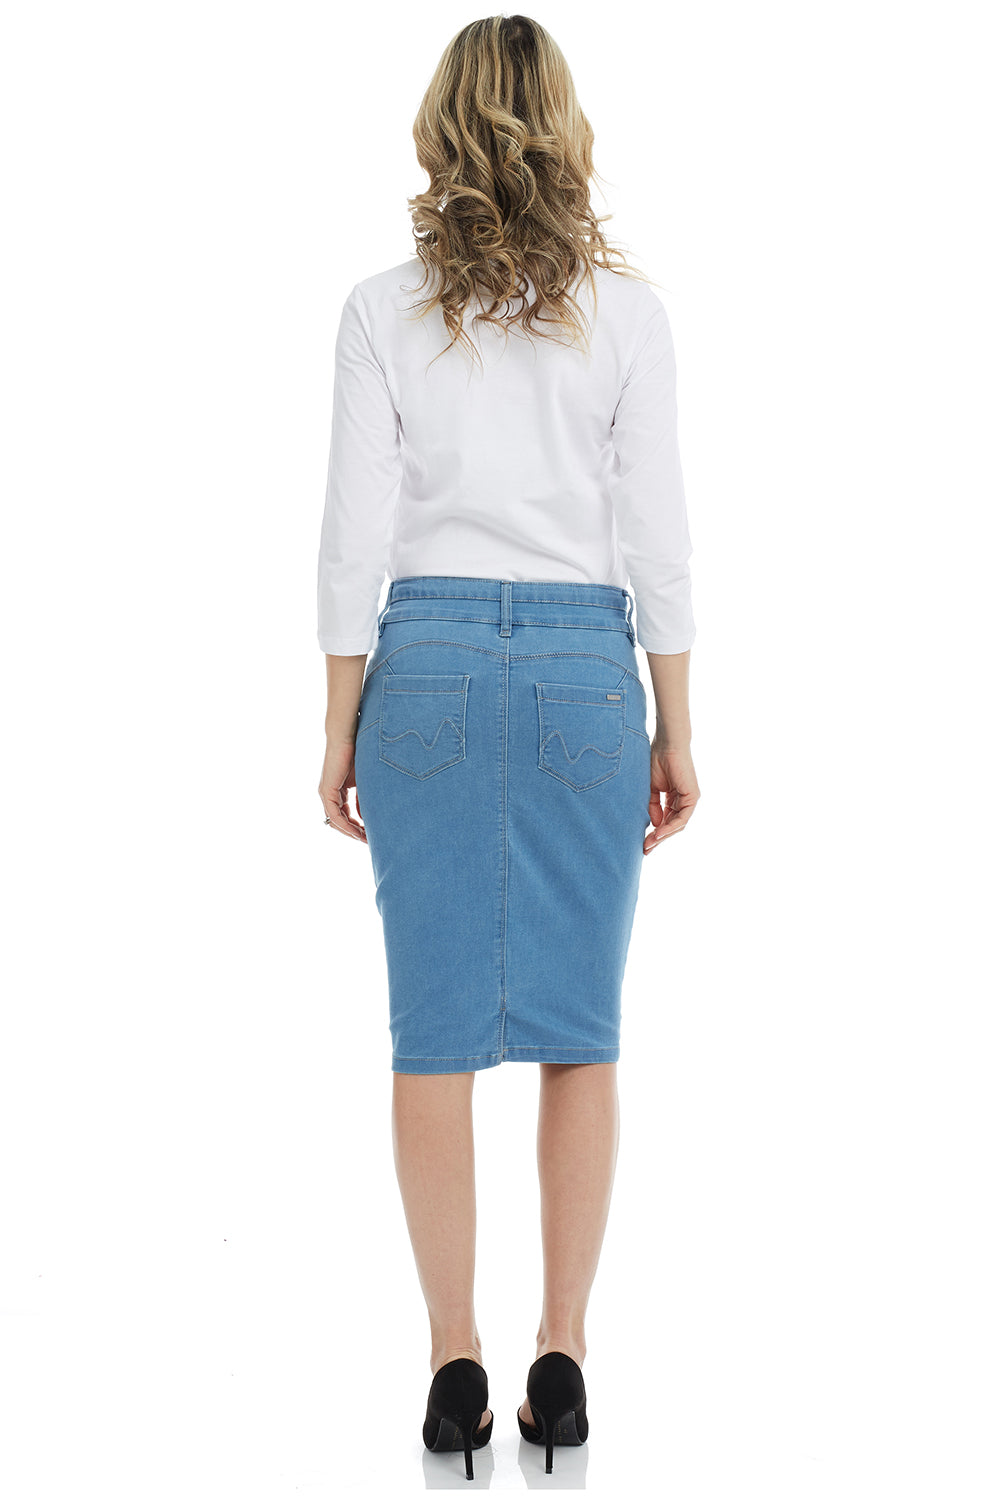 modest light blue jean pencil skirt with pockets